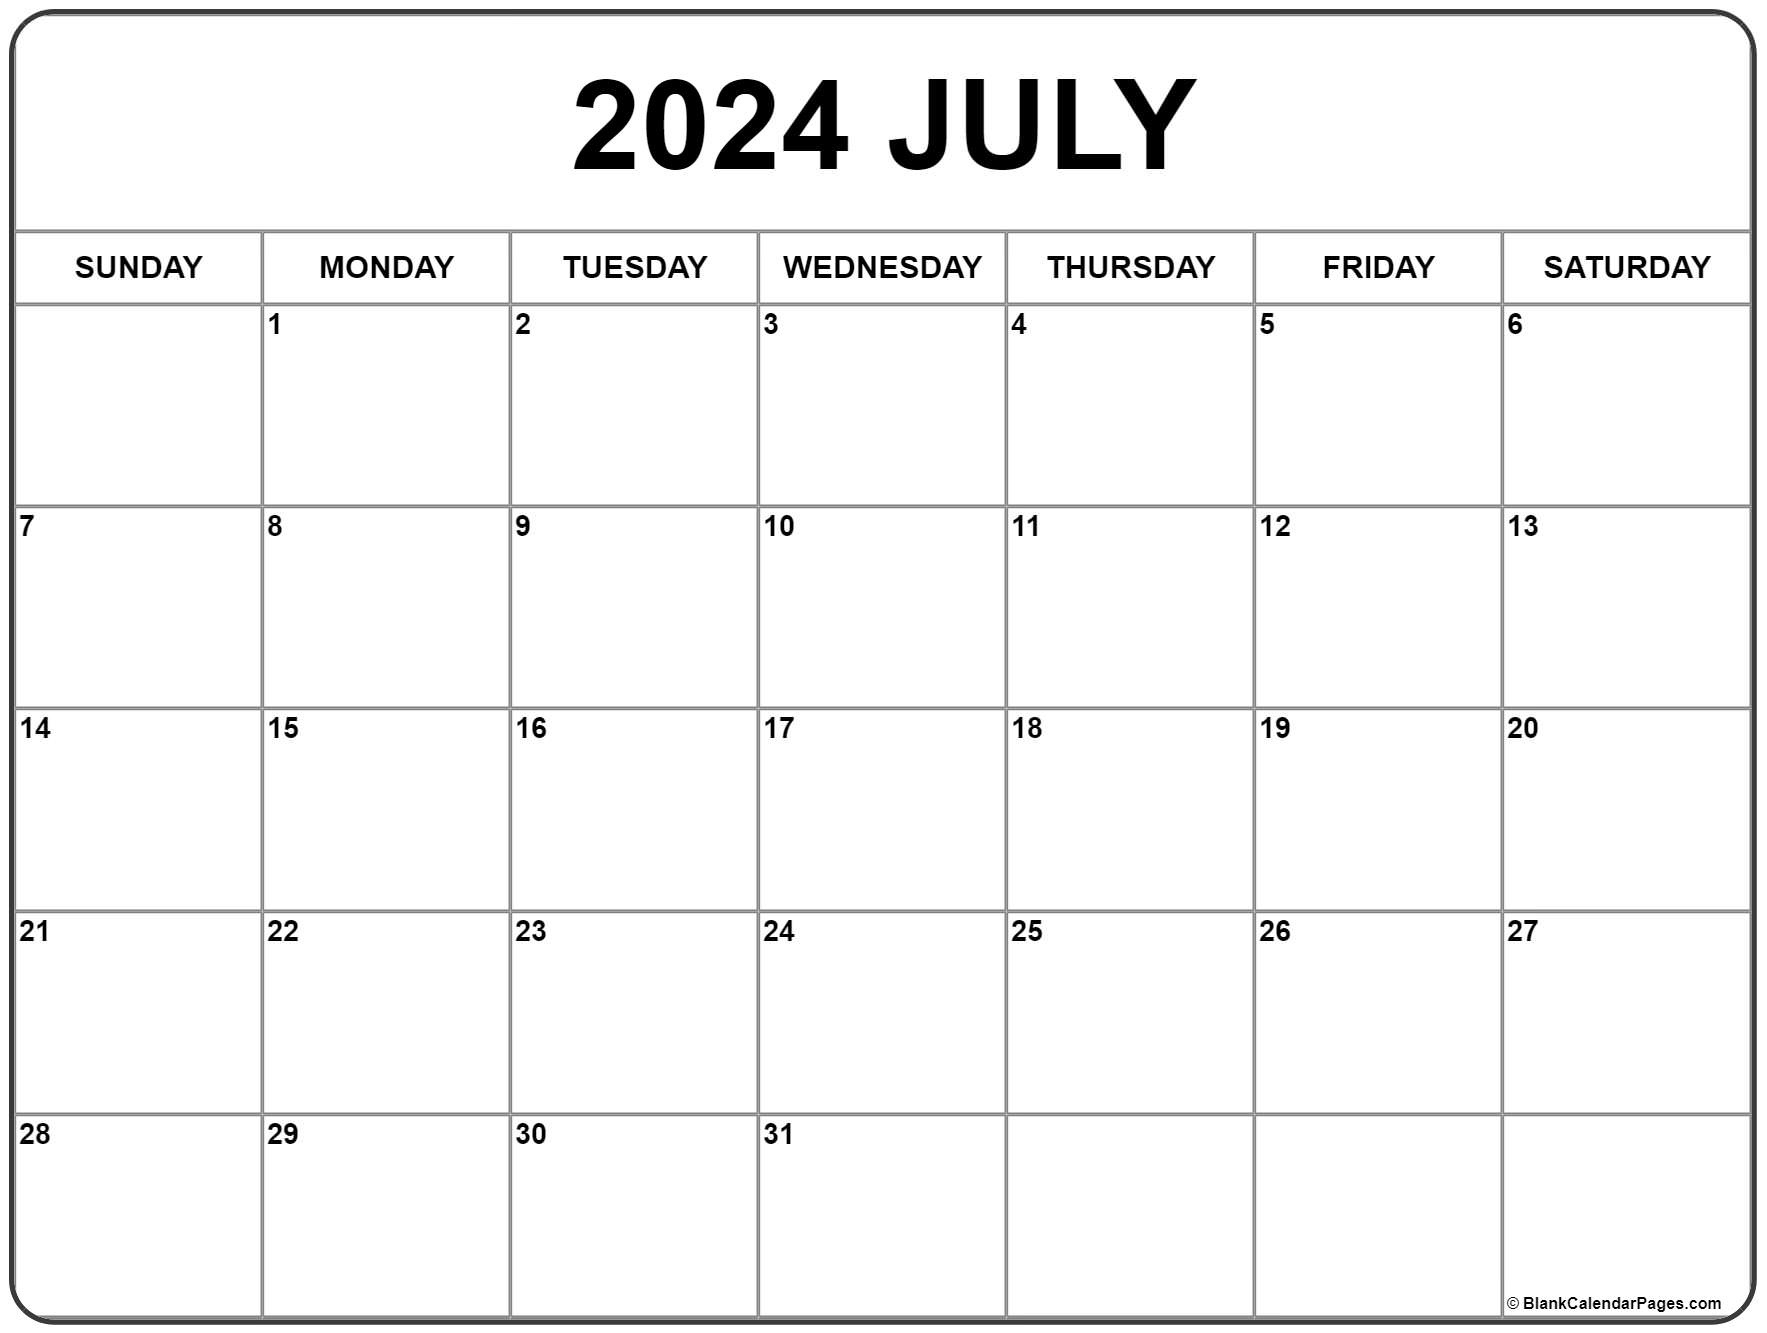 July 2024 Calendar | Free Printable Calendar intended for July 2024 Calendar Planner